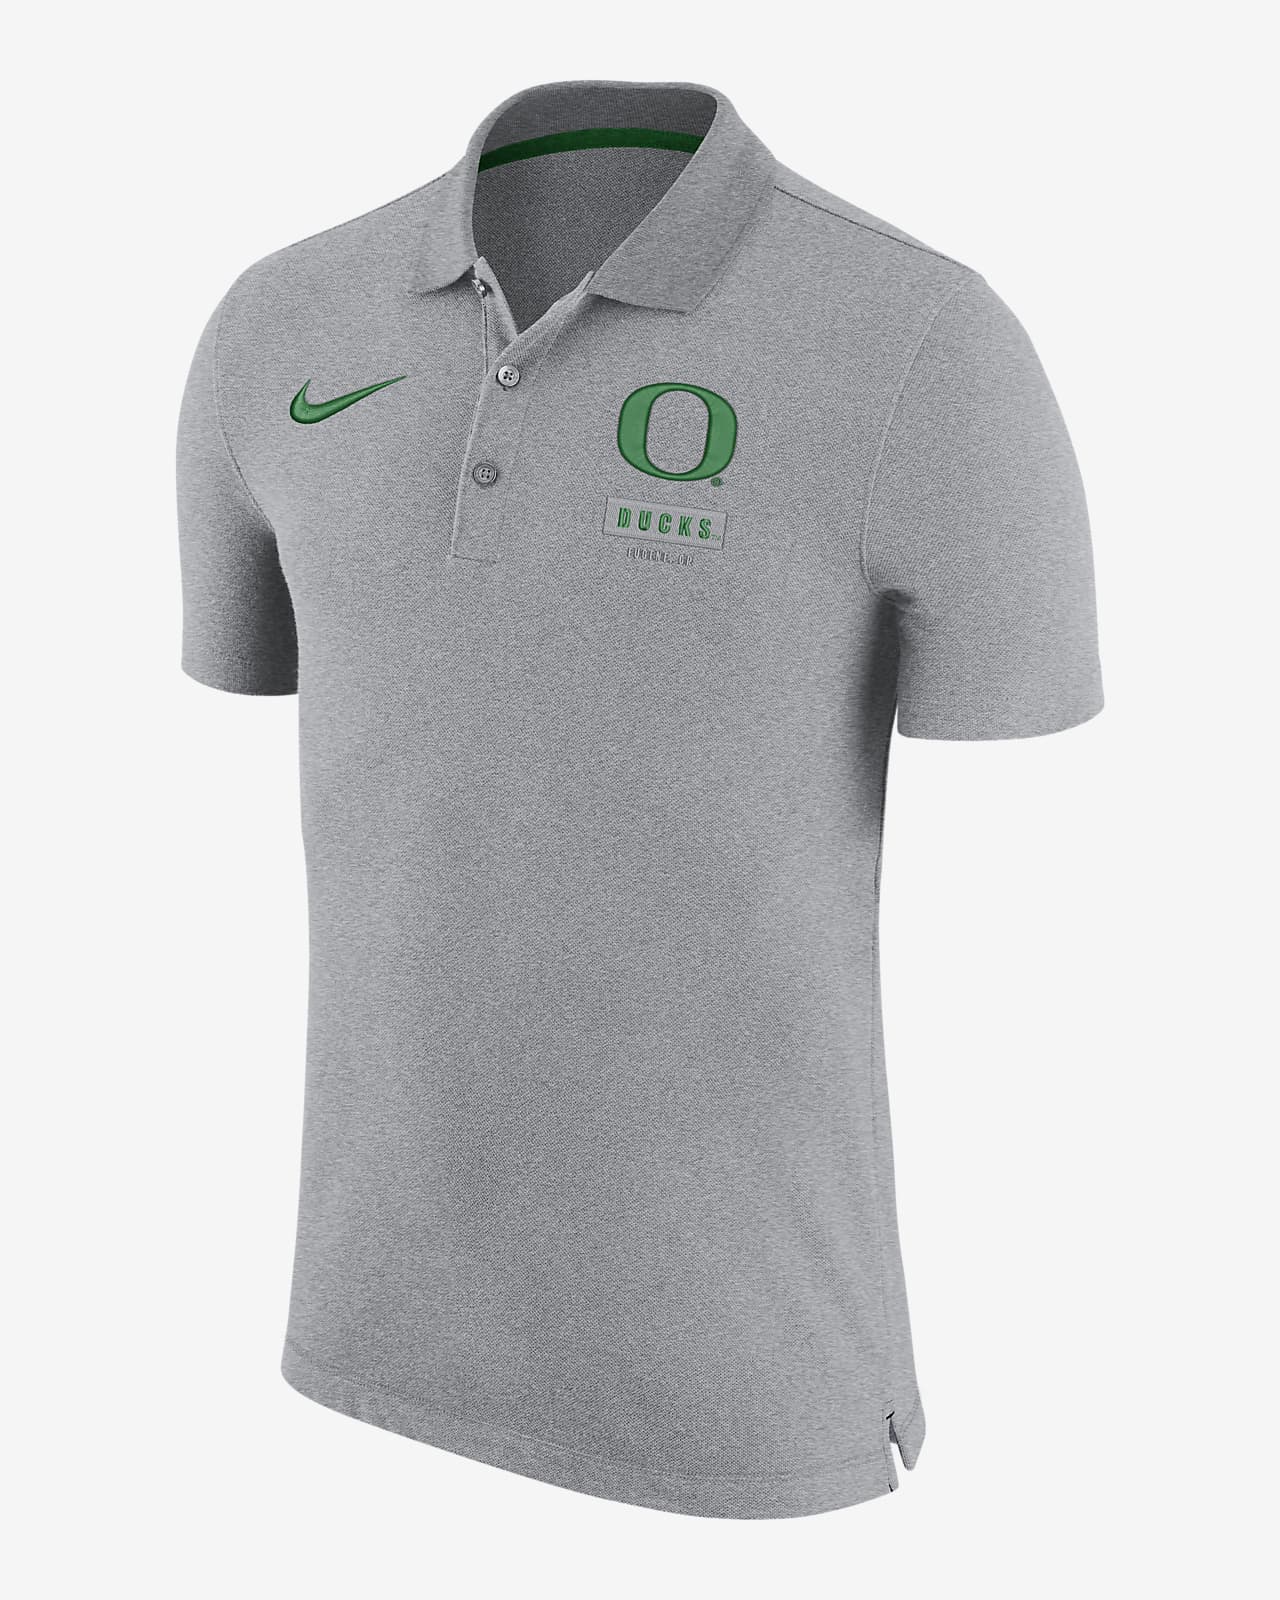 Nike College (Oregon) Men's Polo. Nike.com